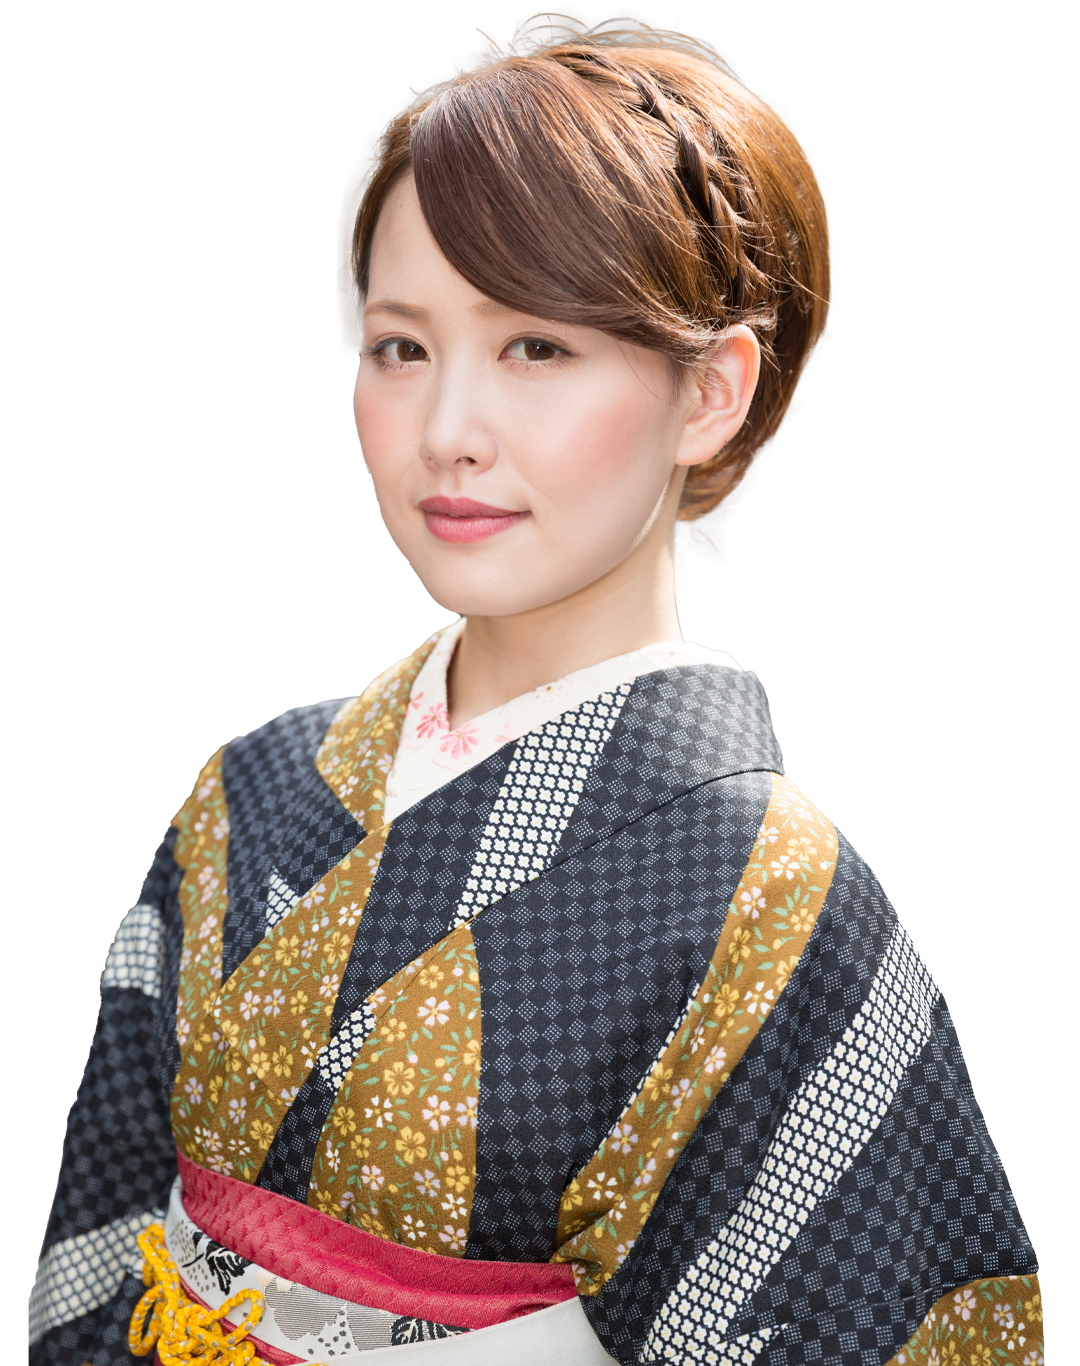 Japanese woman